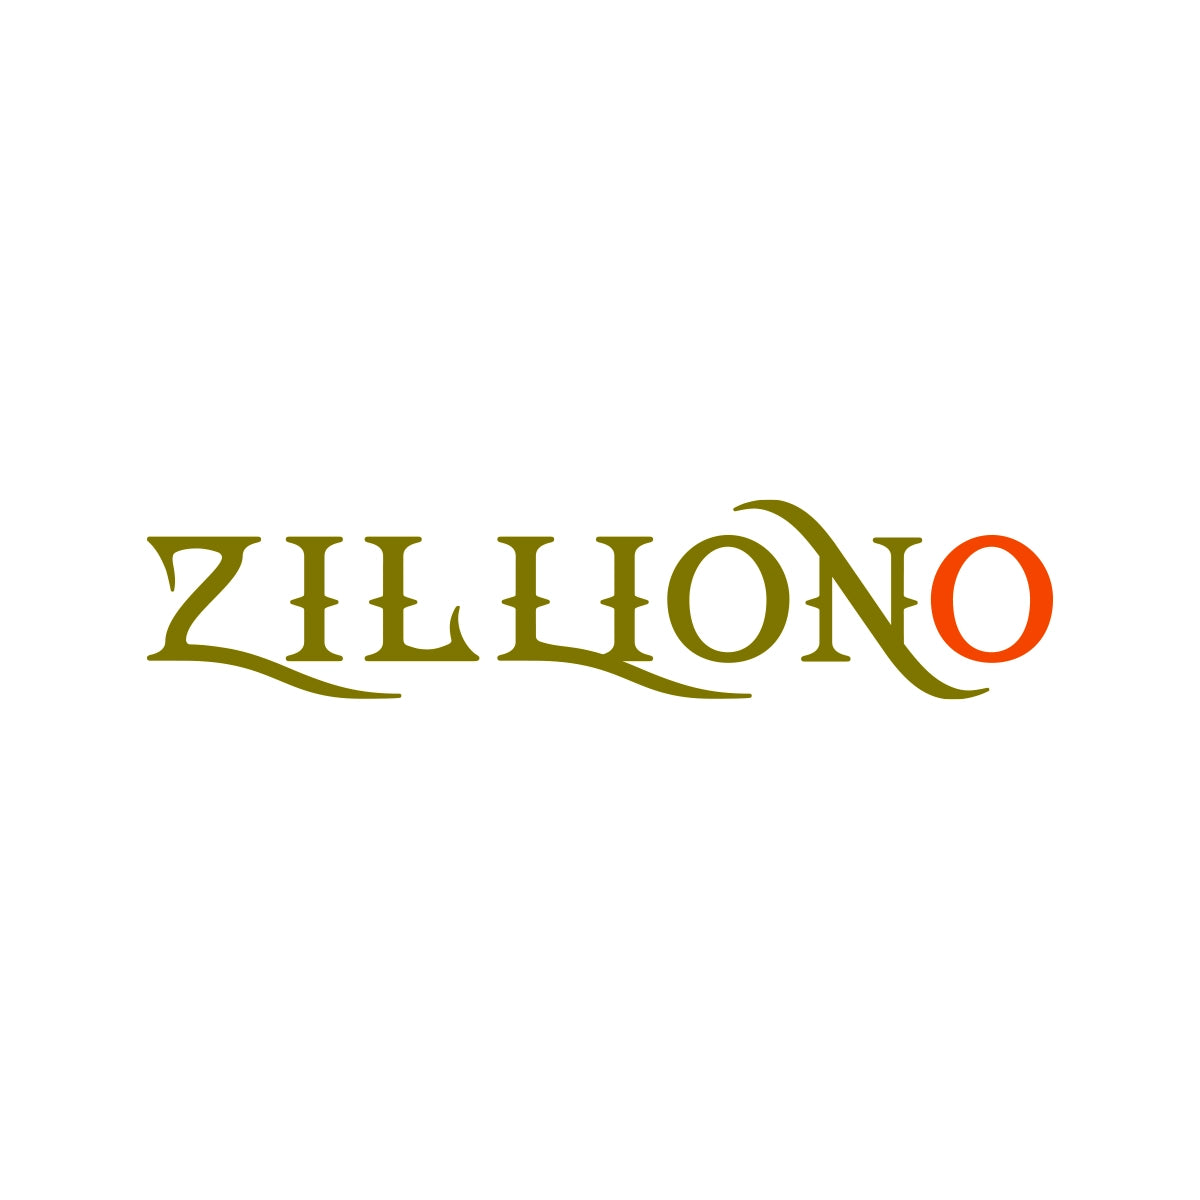 zilliono.com